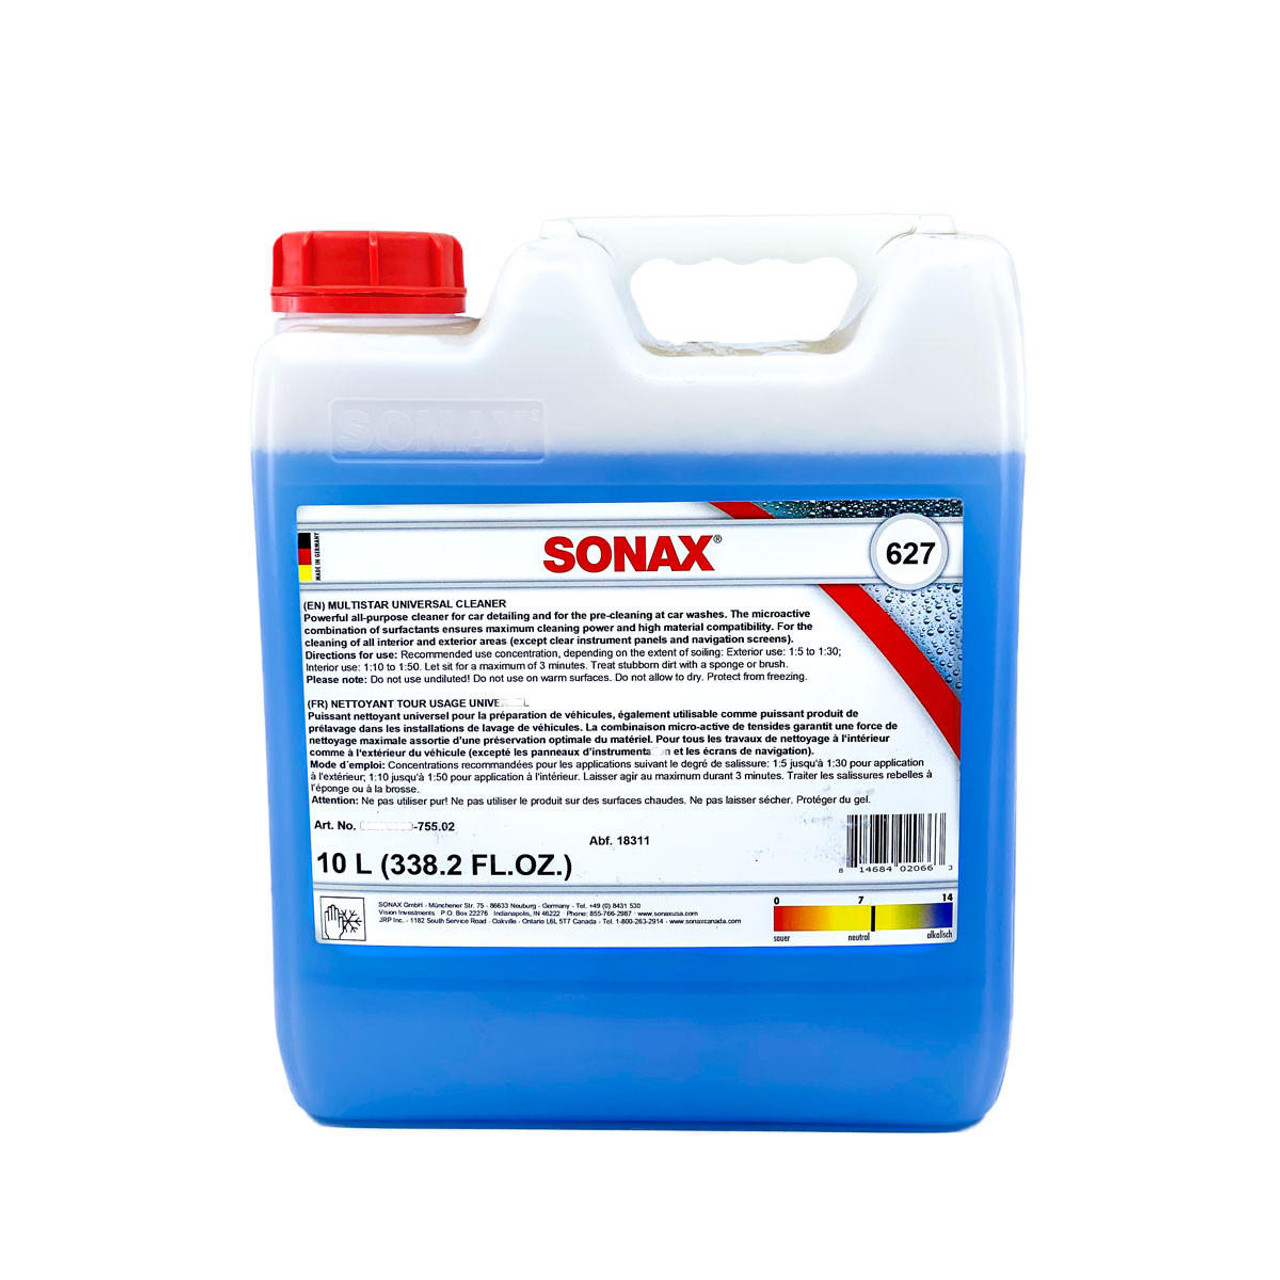 SONAX Sonax Multi Star All Purpose Cleaner 10 Liter